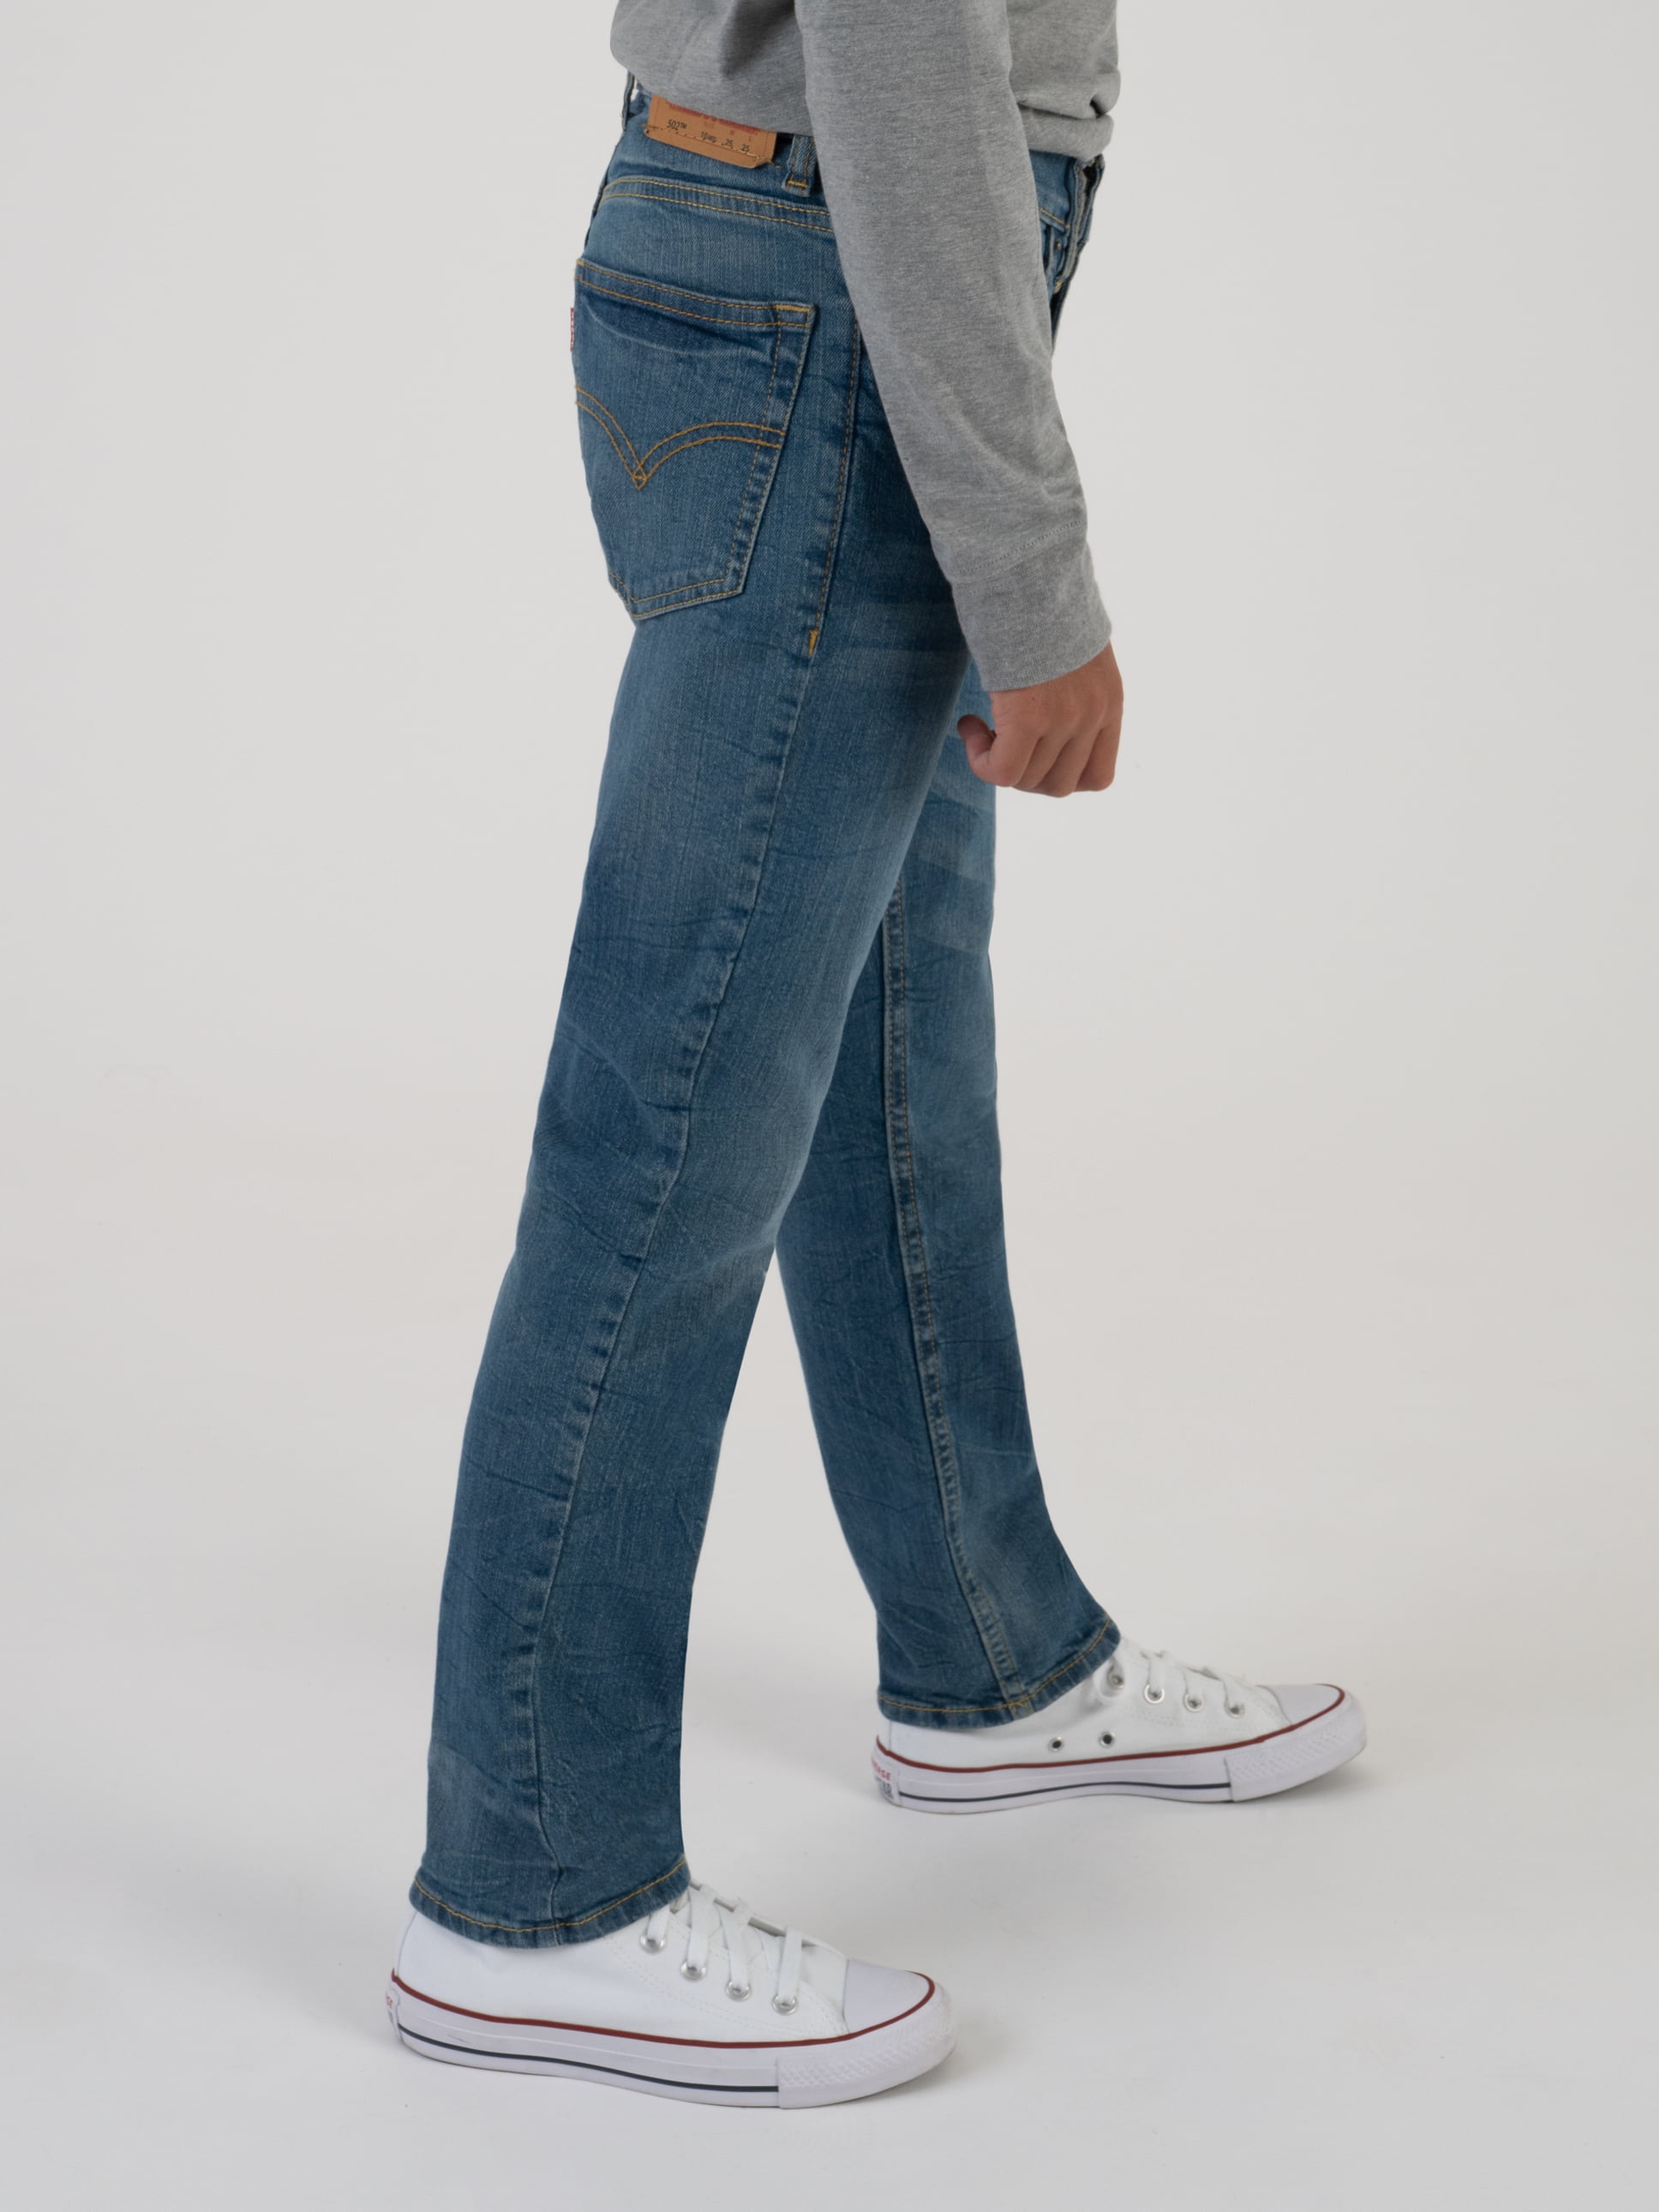 Levi's Boys' 502 Regular Taper Fit Performance Jeans, Sizes 4-20 -  